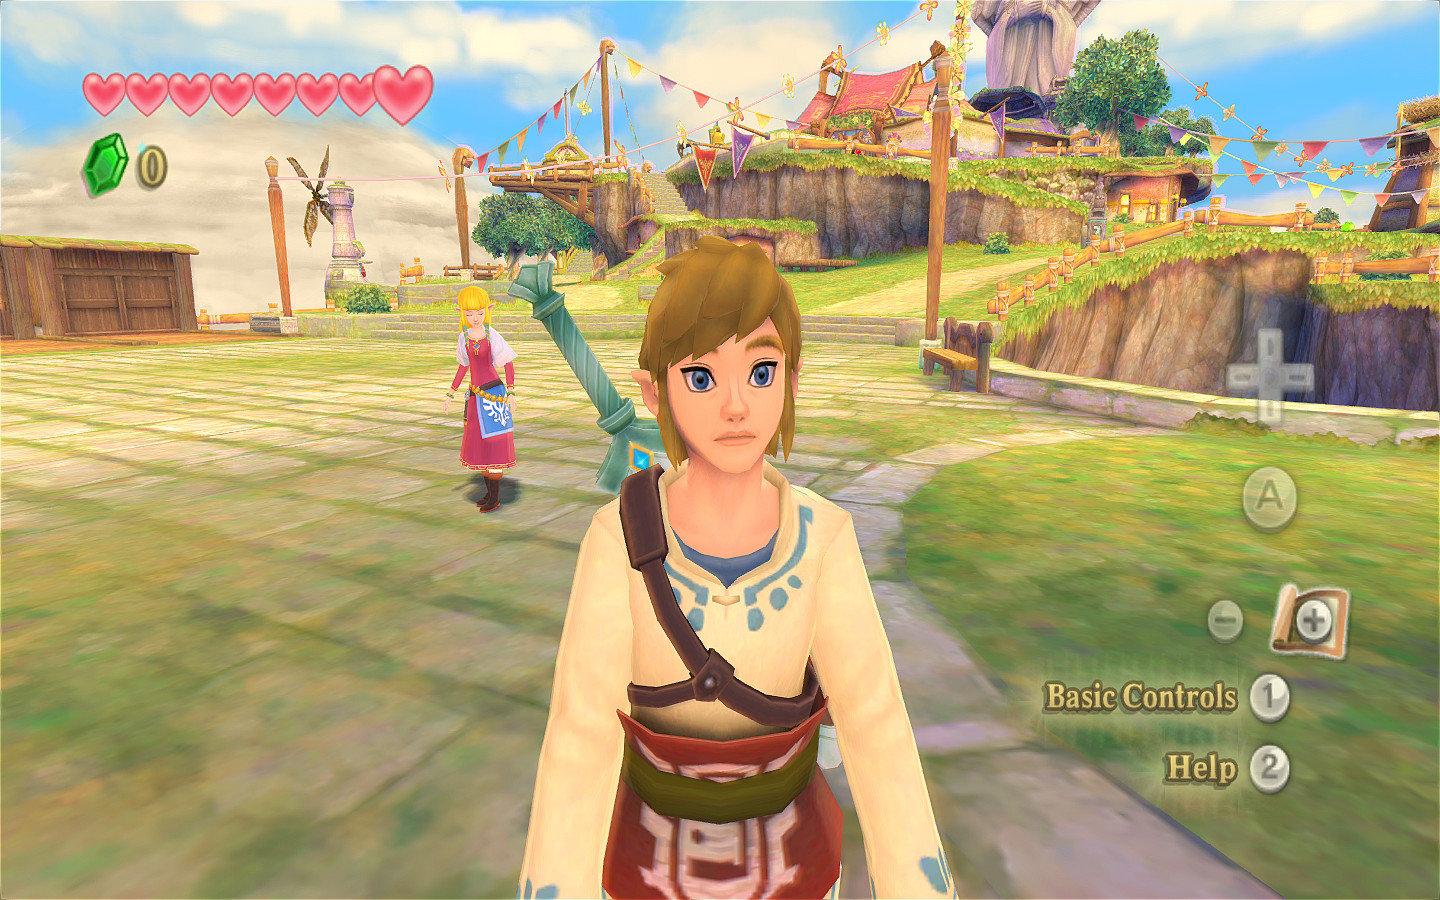  Video Game Reviews: Review: The Legend of Zelda: Skyward Sword